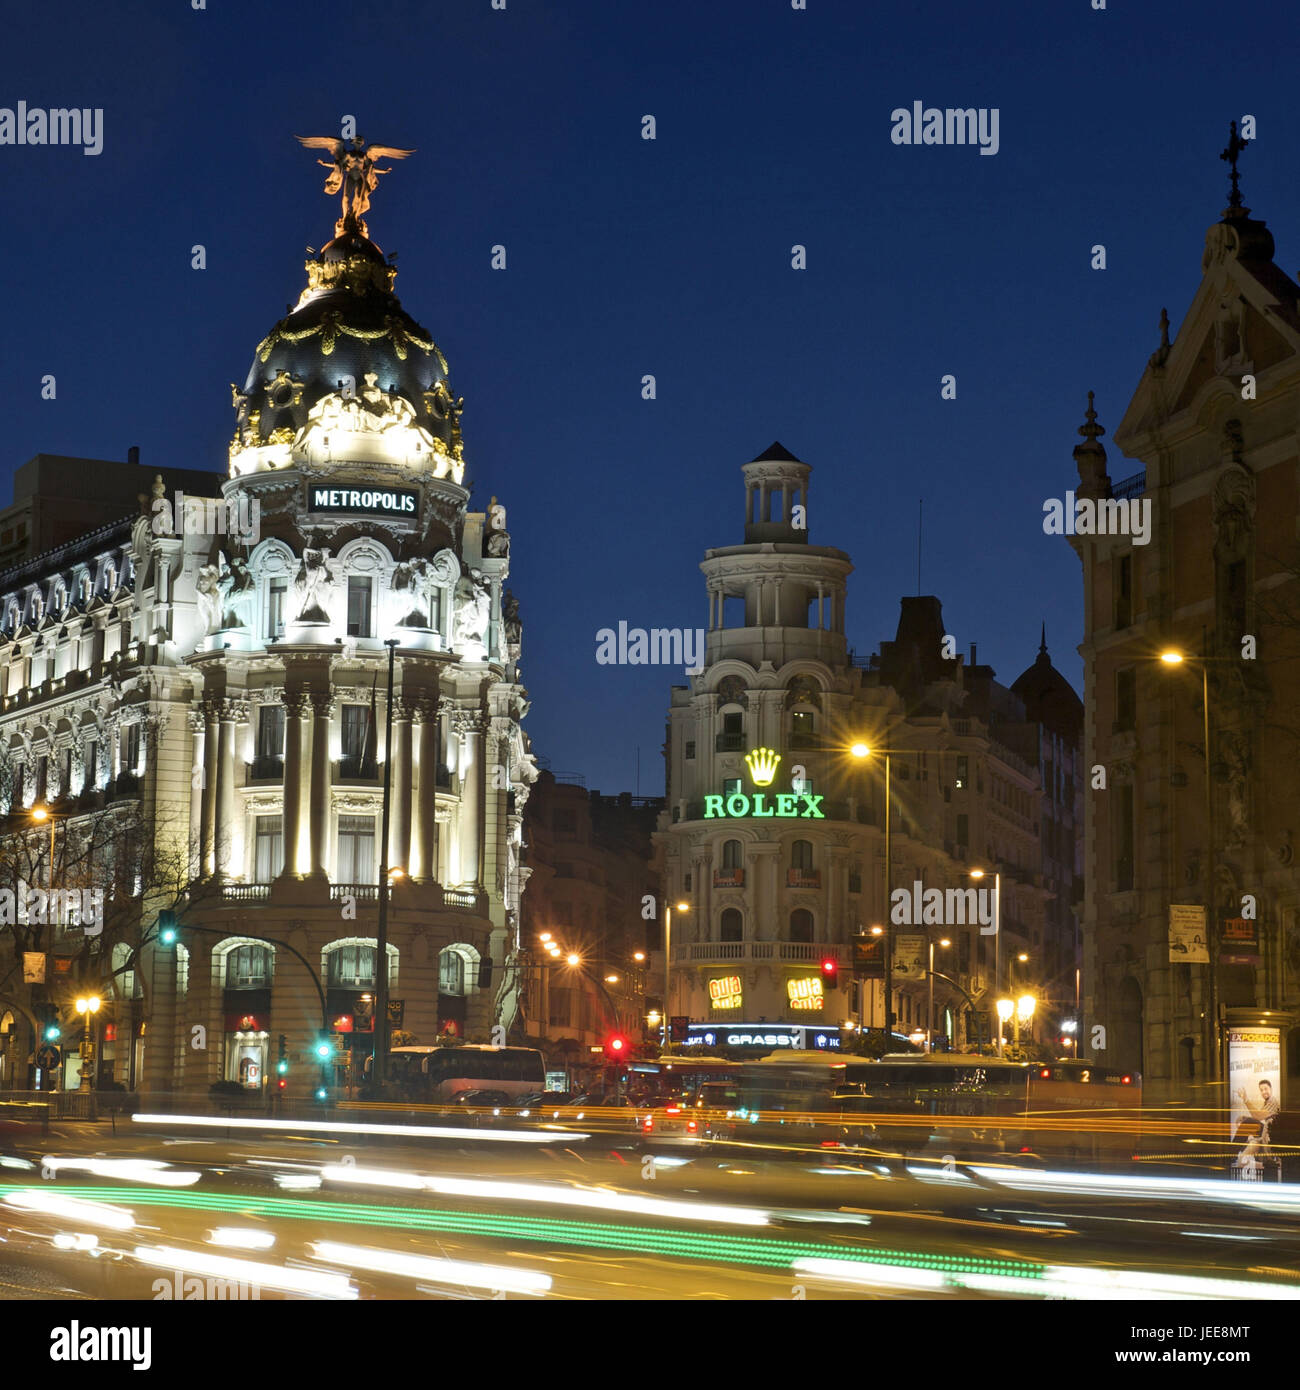 Spain, Madrid, Metropolis building at night, grain Via, motor traffic, Stock Photo